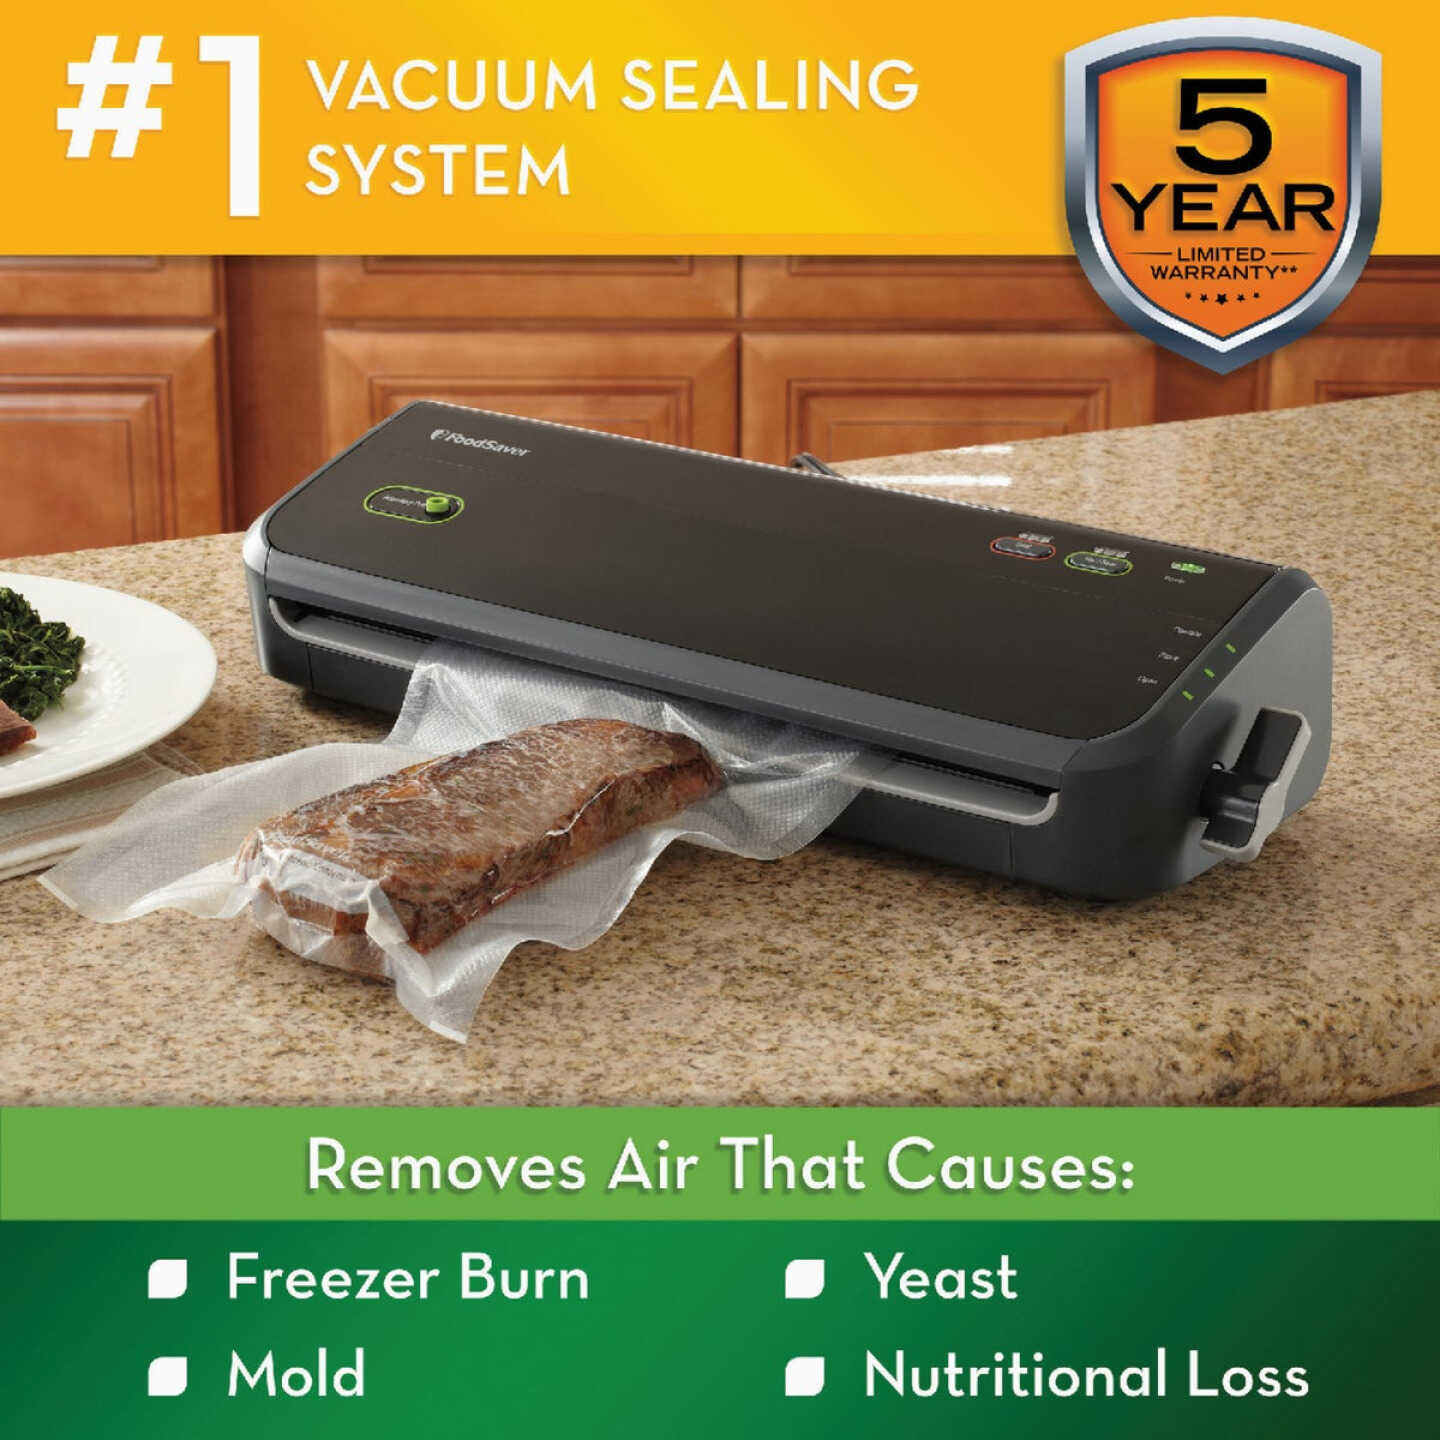 FoodSaver Vacuum Sealer Machine with Sealer Bags and Roll, Bag Storage,  Cutter Bar, and Handheld Vacuum Sealer for Airtight Food Storage and Sous